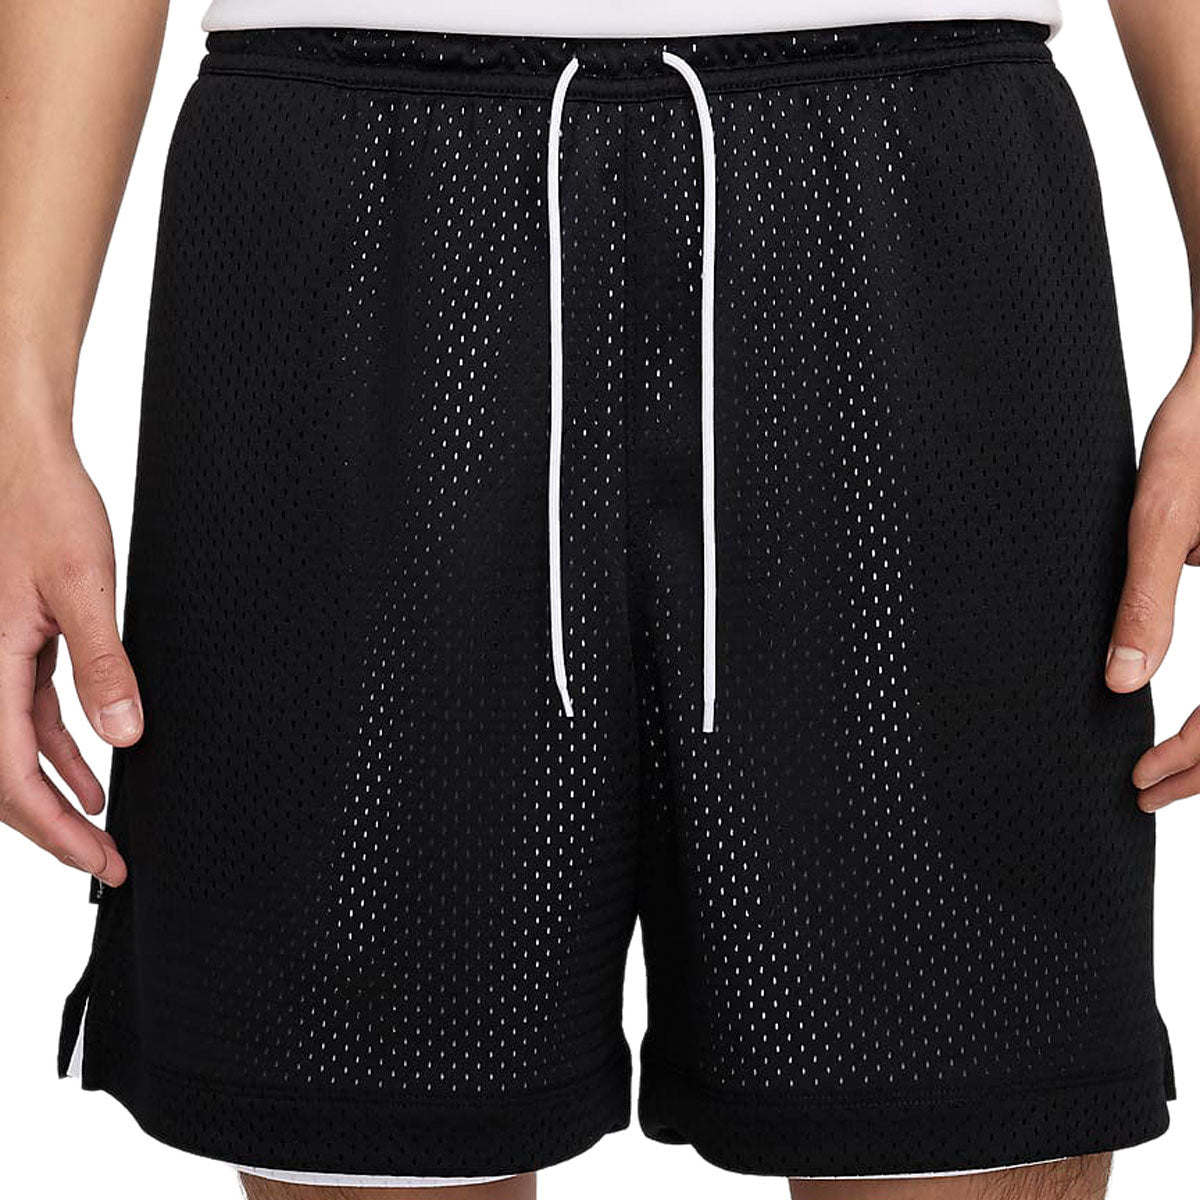 Nike SB Basketball Skate Shorts - Black/White image 2